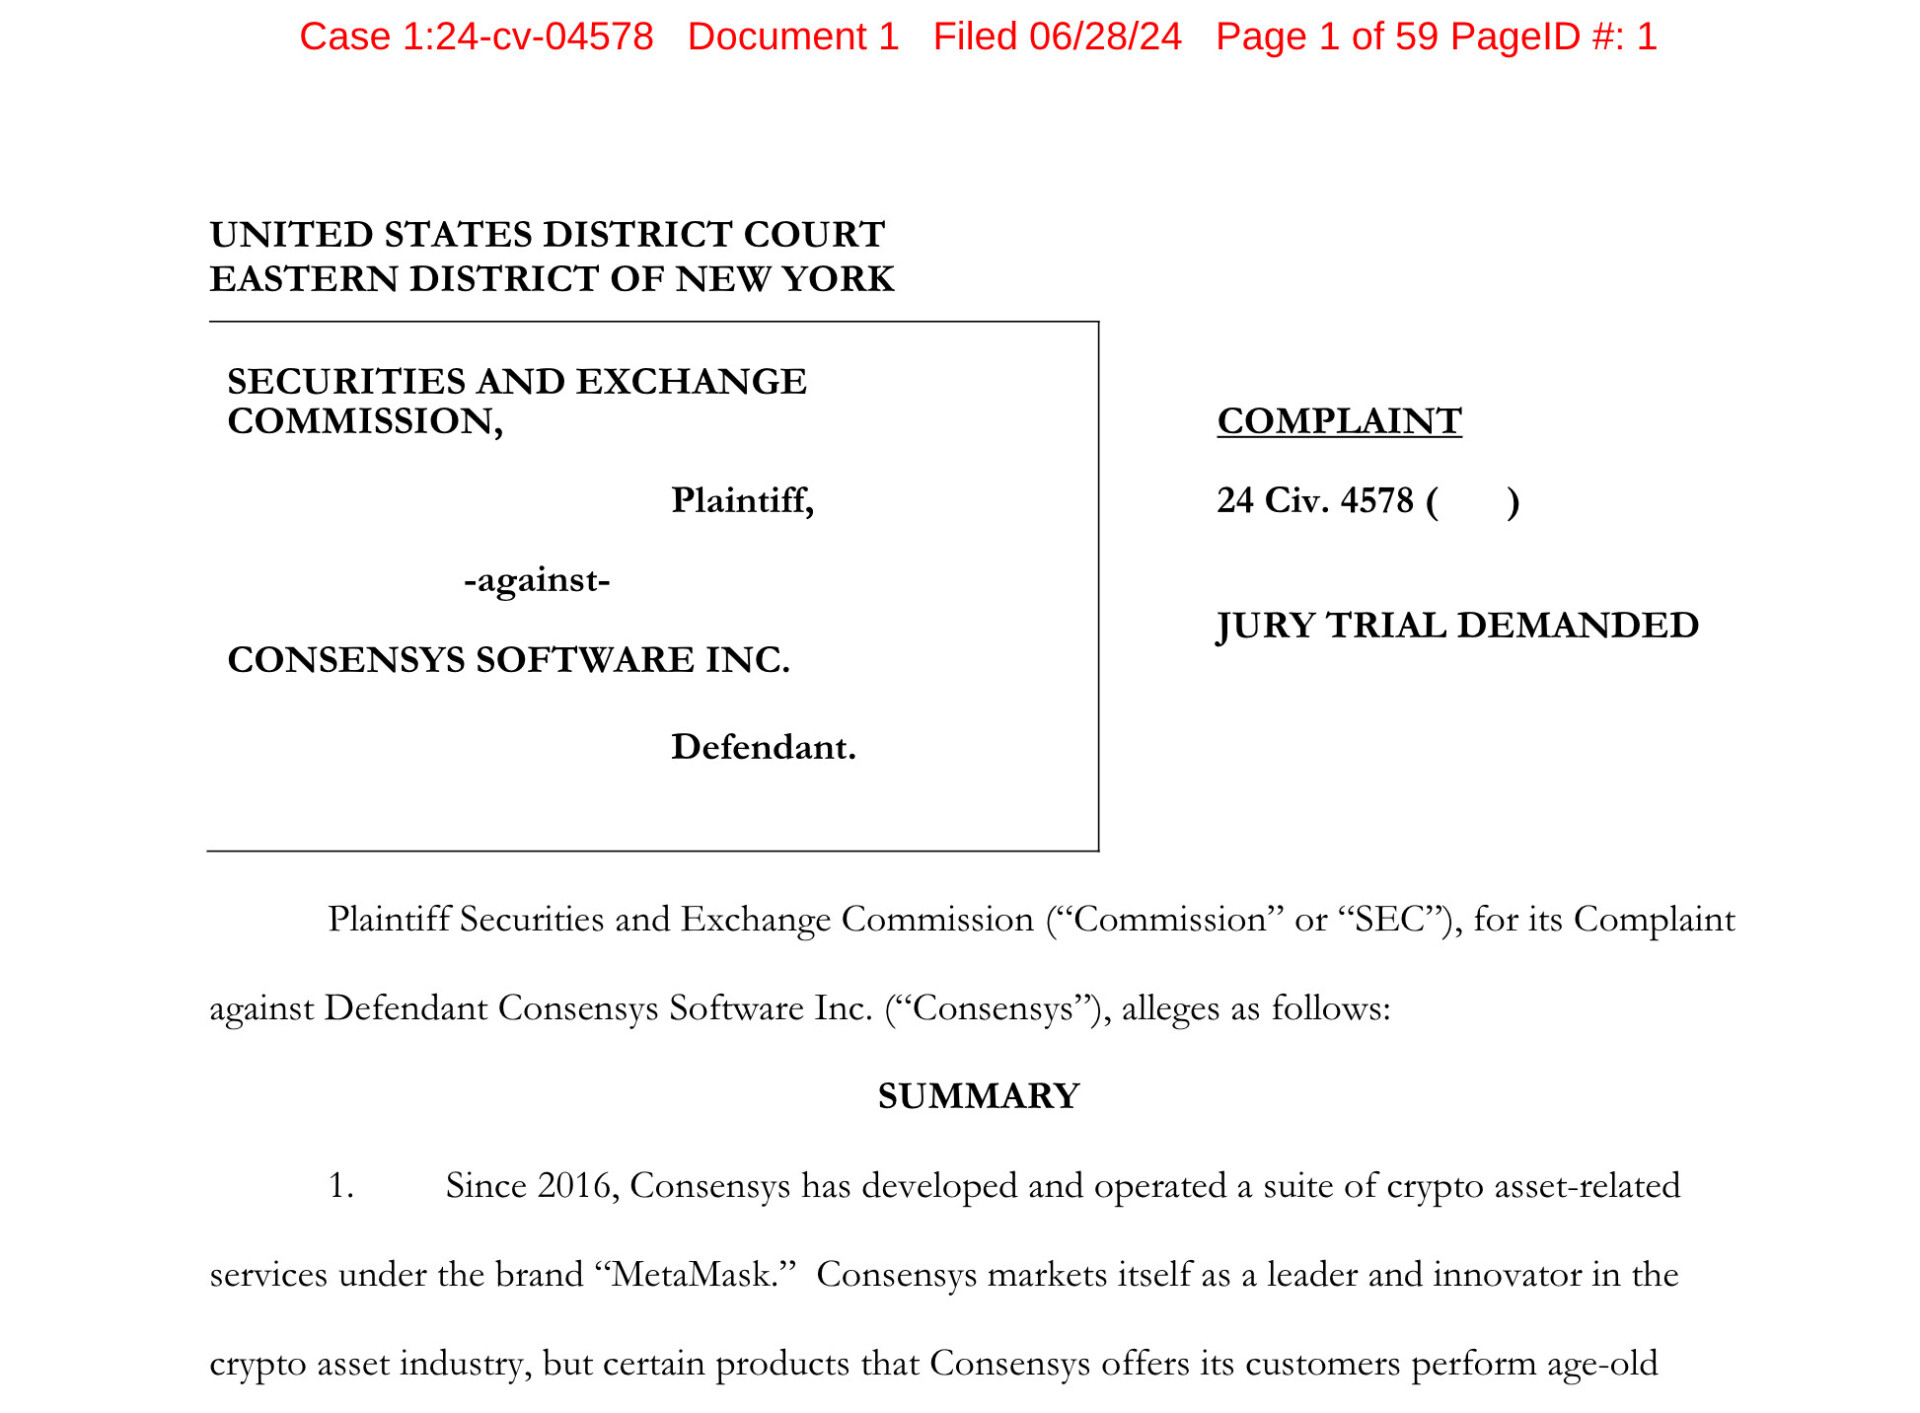 SEC verklagt Consensys wegen Verstoßes gegen Wertpapiergesetze durch MetaMask